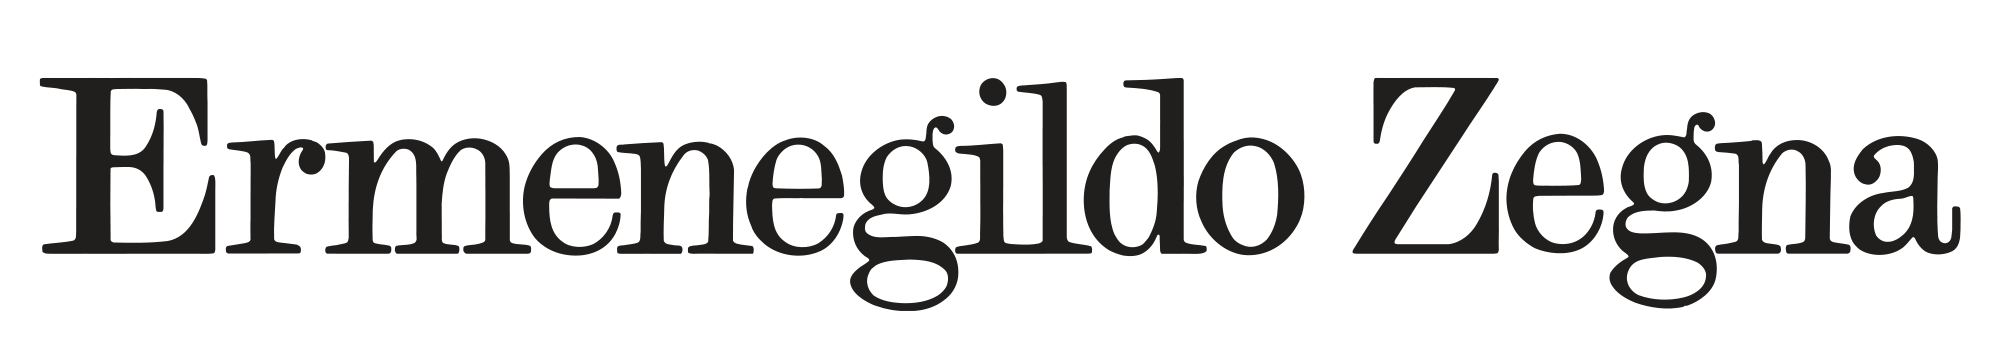 ermenegildo_zegna_logo-svg